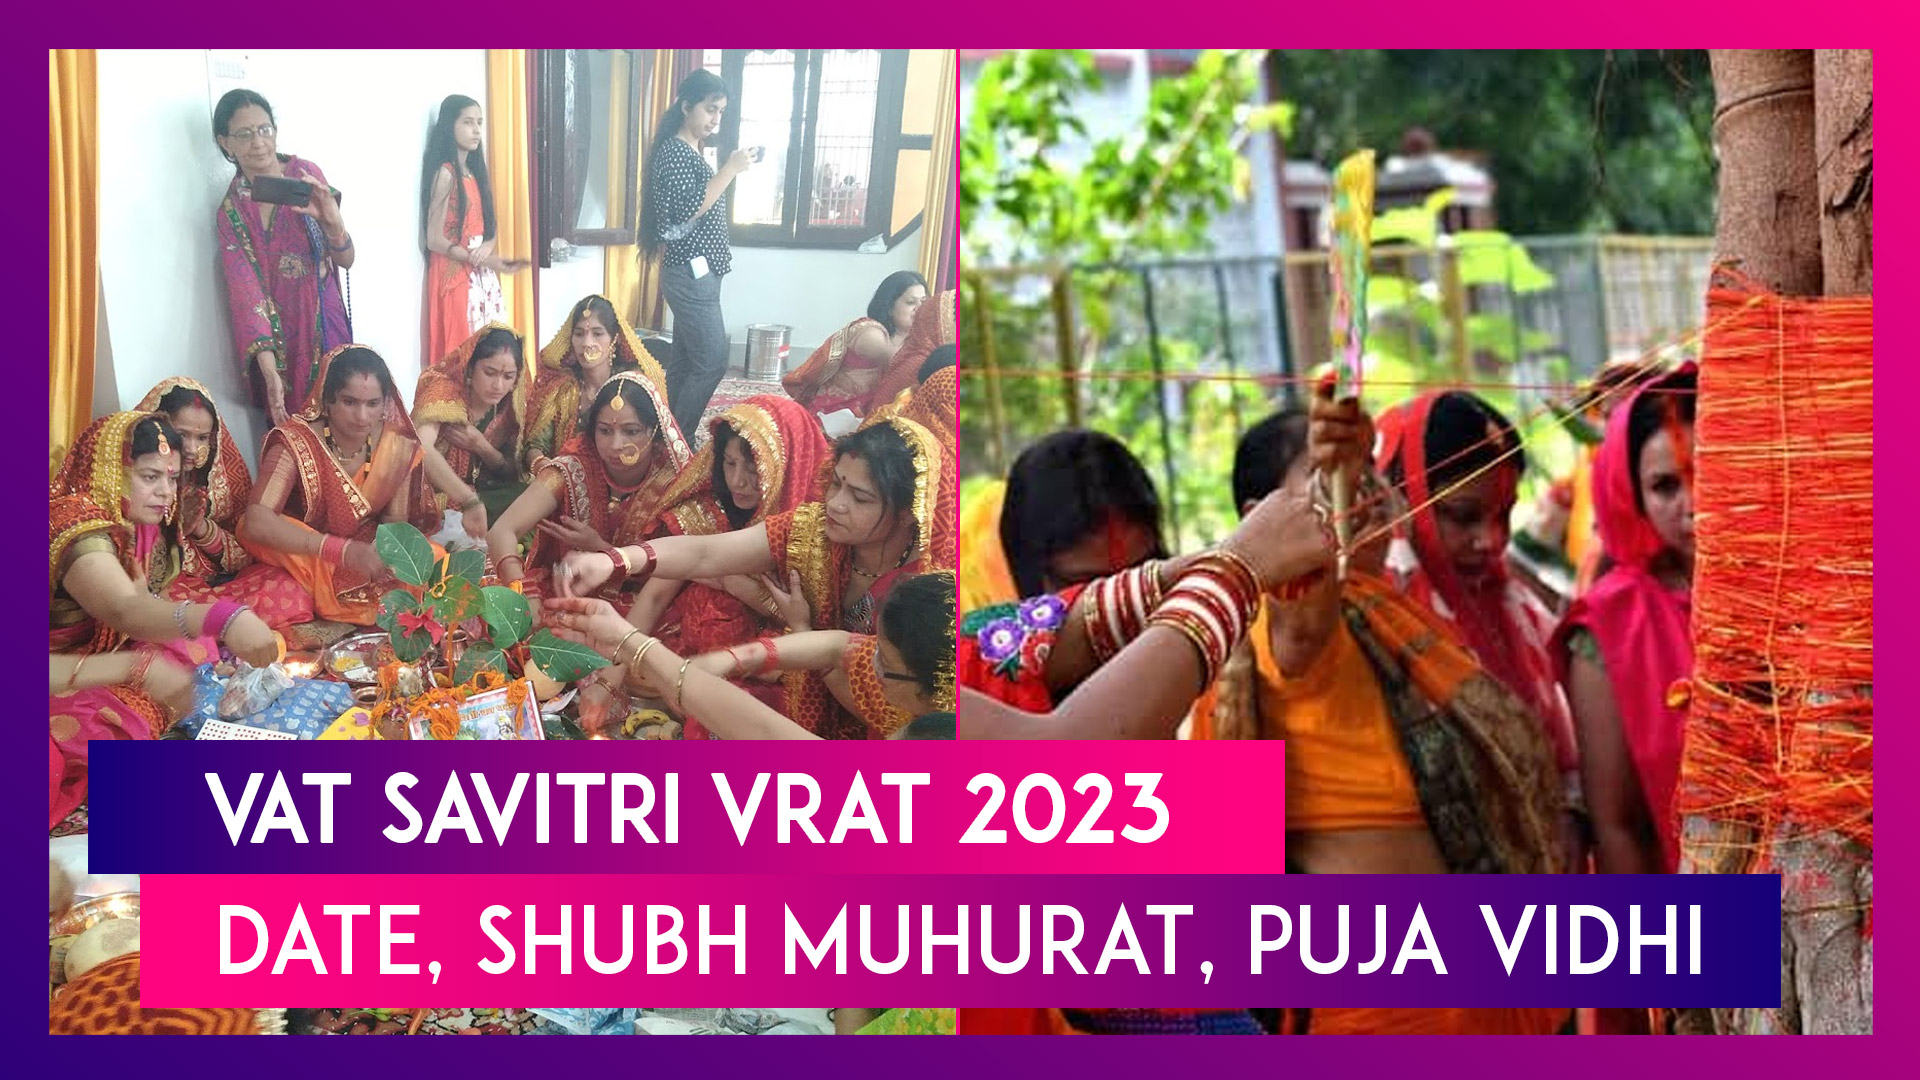 Vat Savitri Vrat 2023: Date, Shubh Muhurat, Puja Vidhi Of The Day When Women Fast For Long Life Of Their Husbands